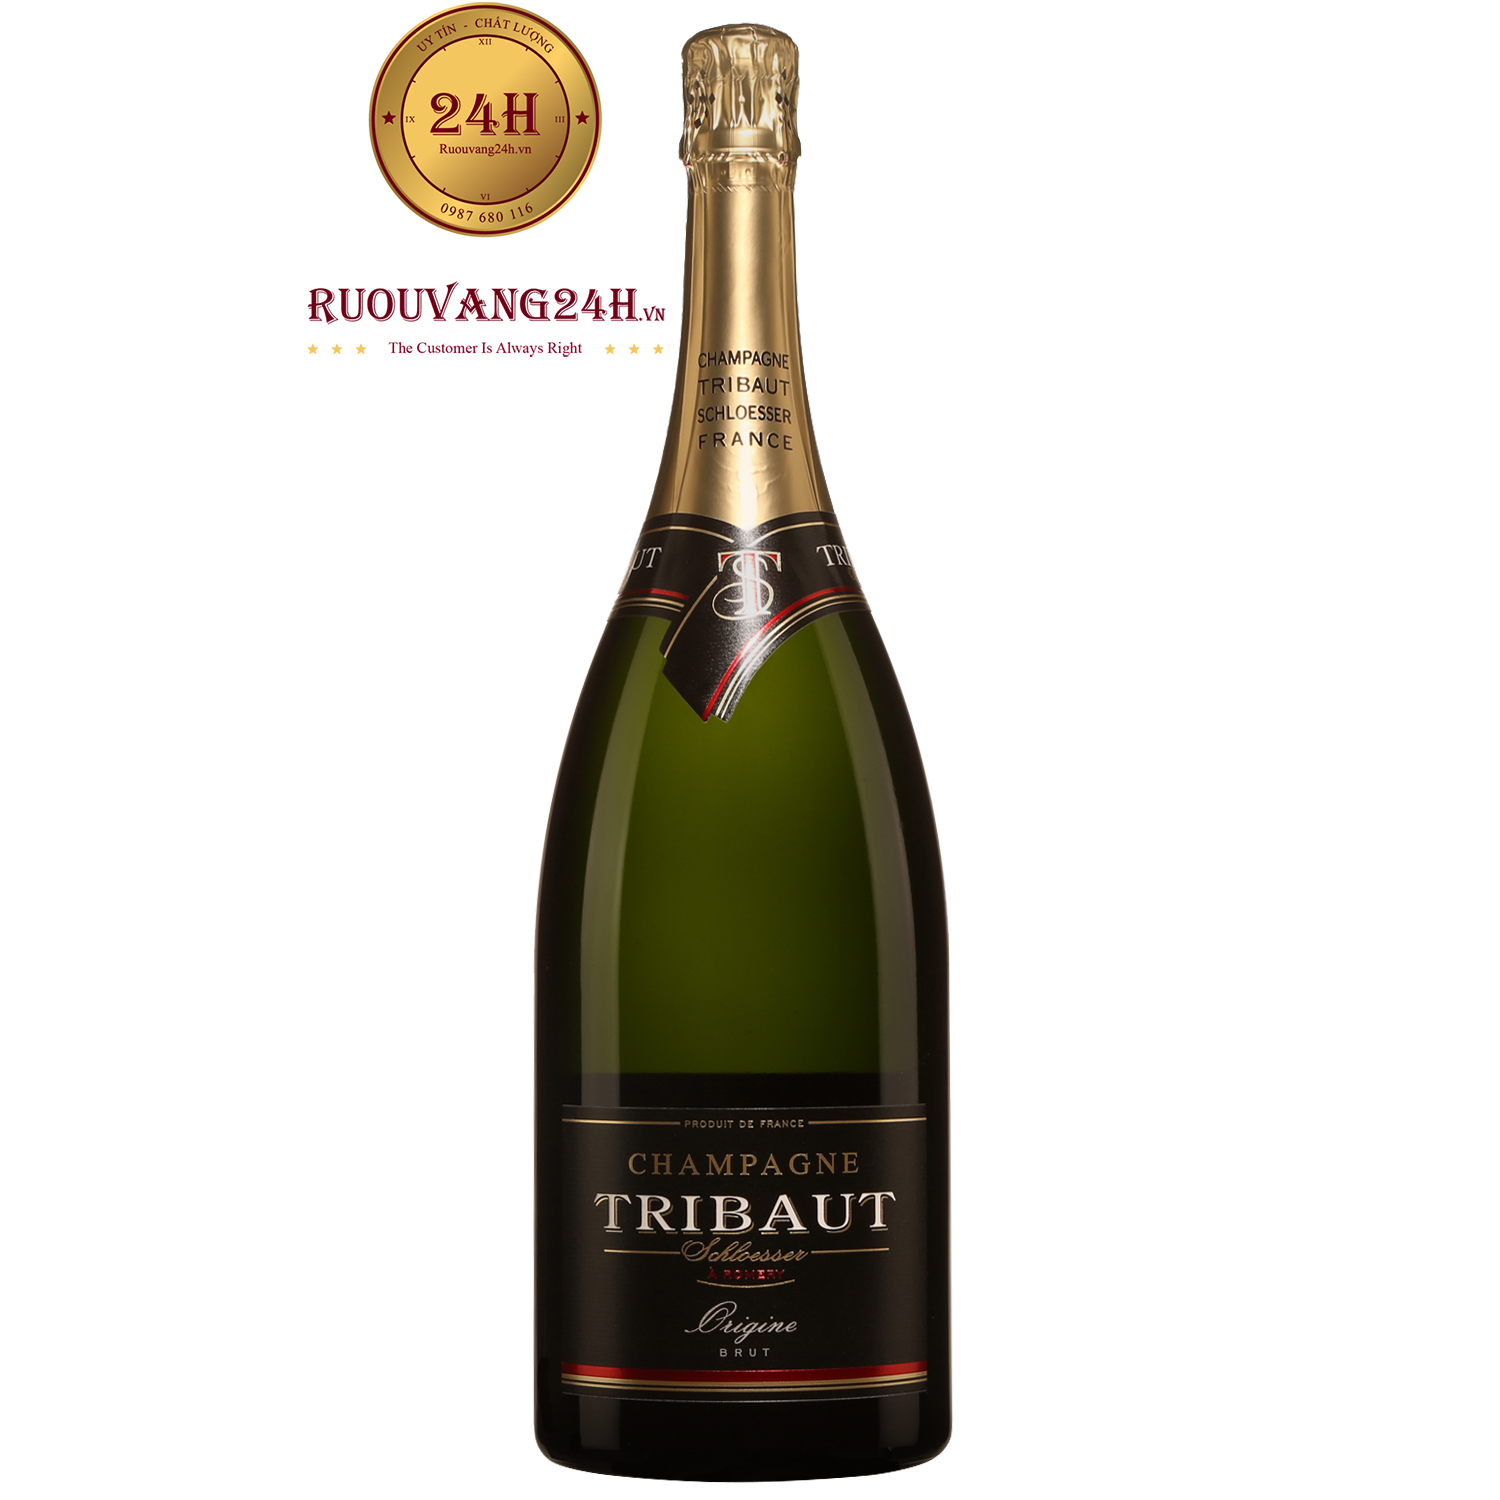 Rượu Champagne Tribaut Schloesser Origine Brut